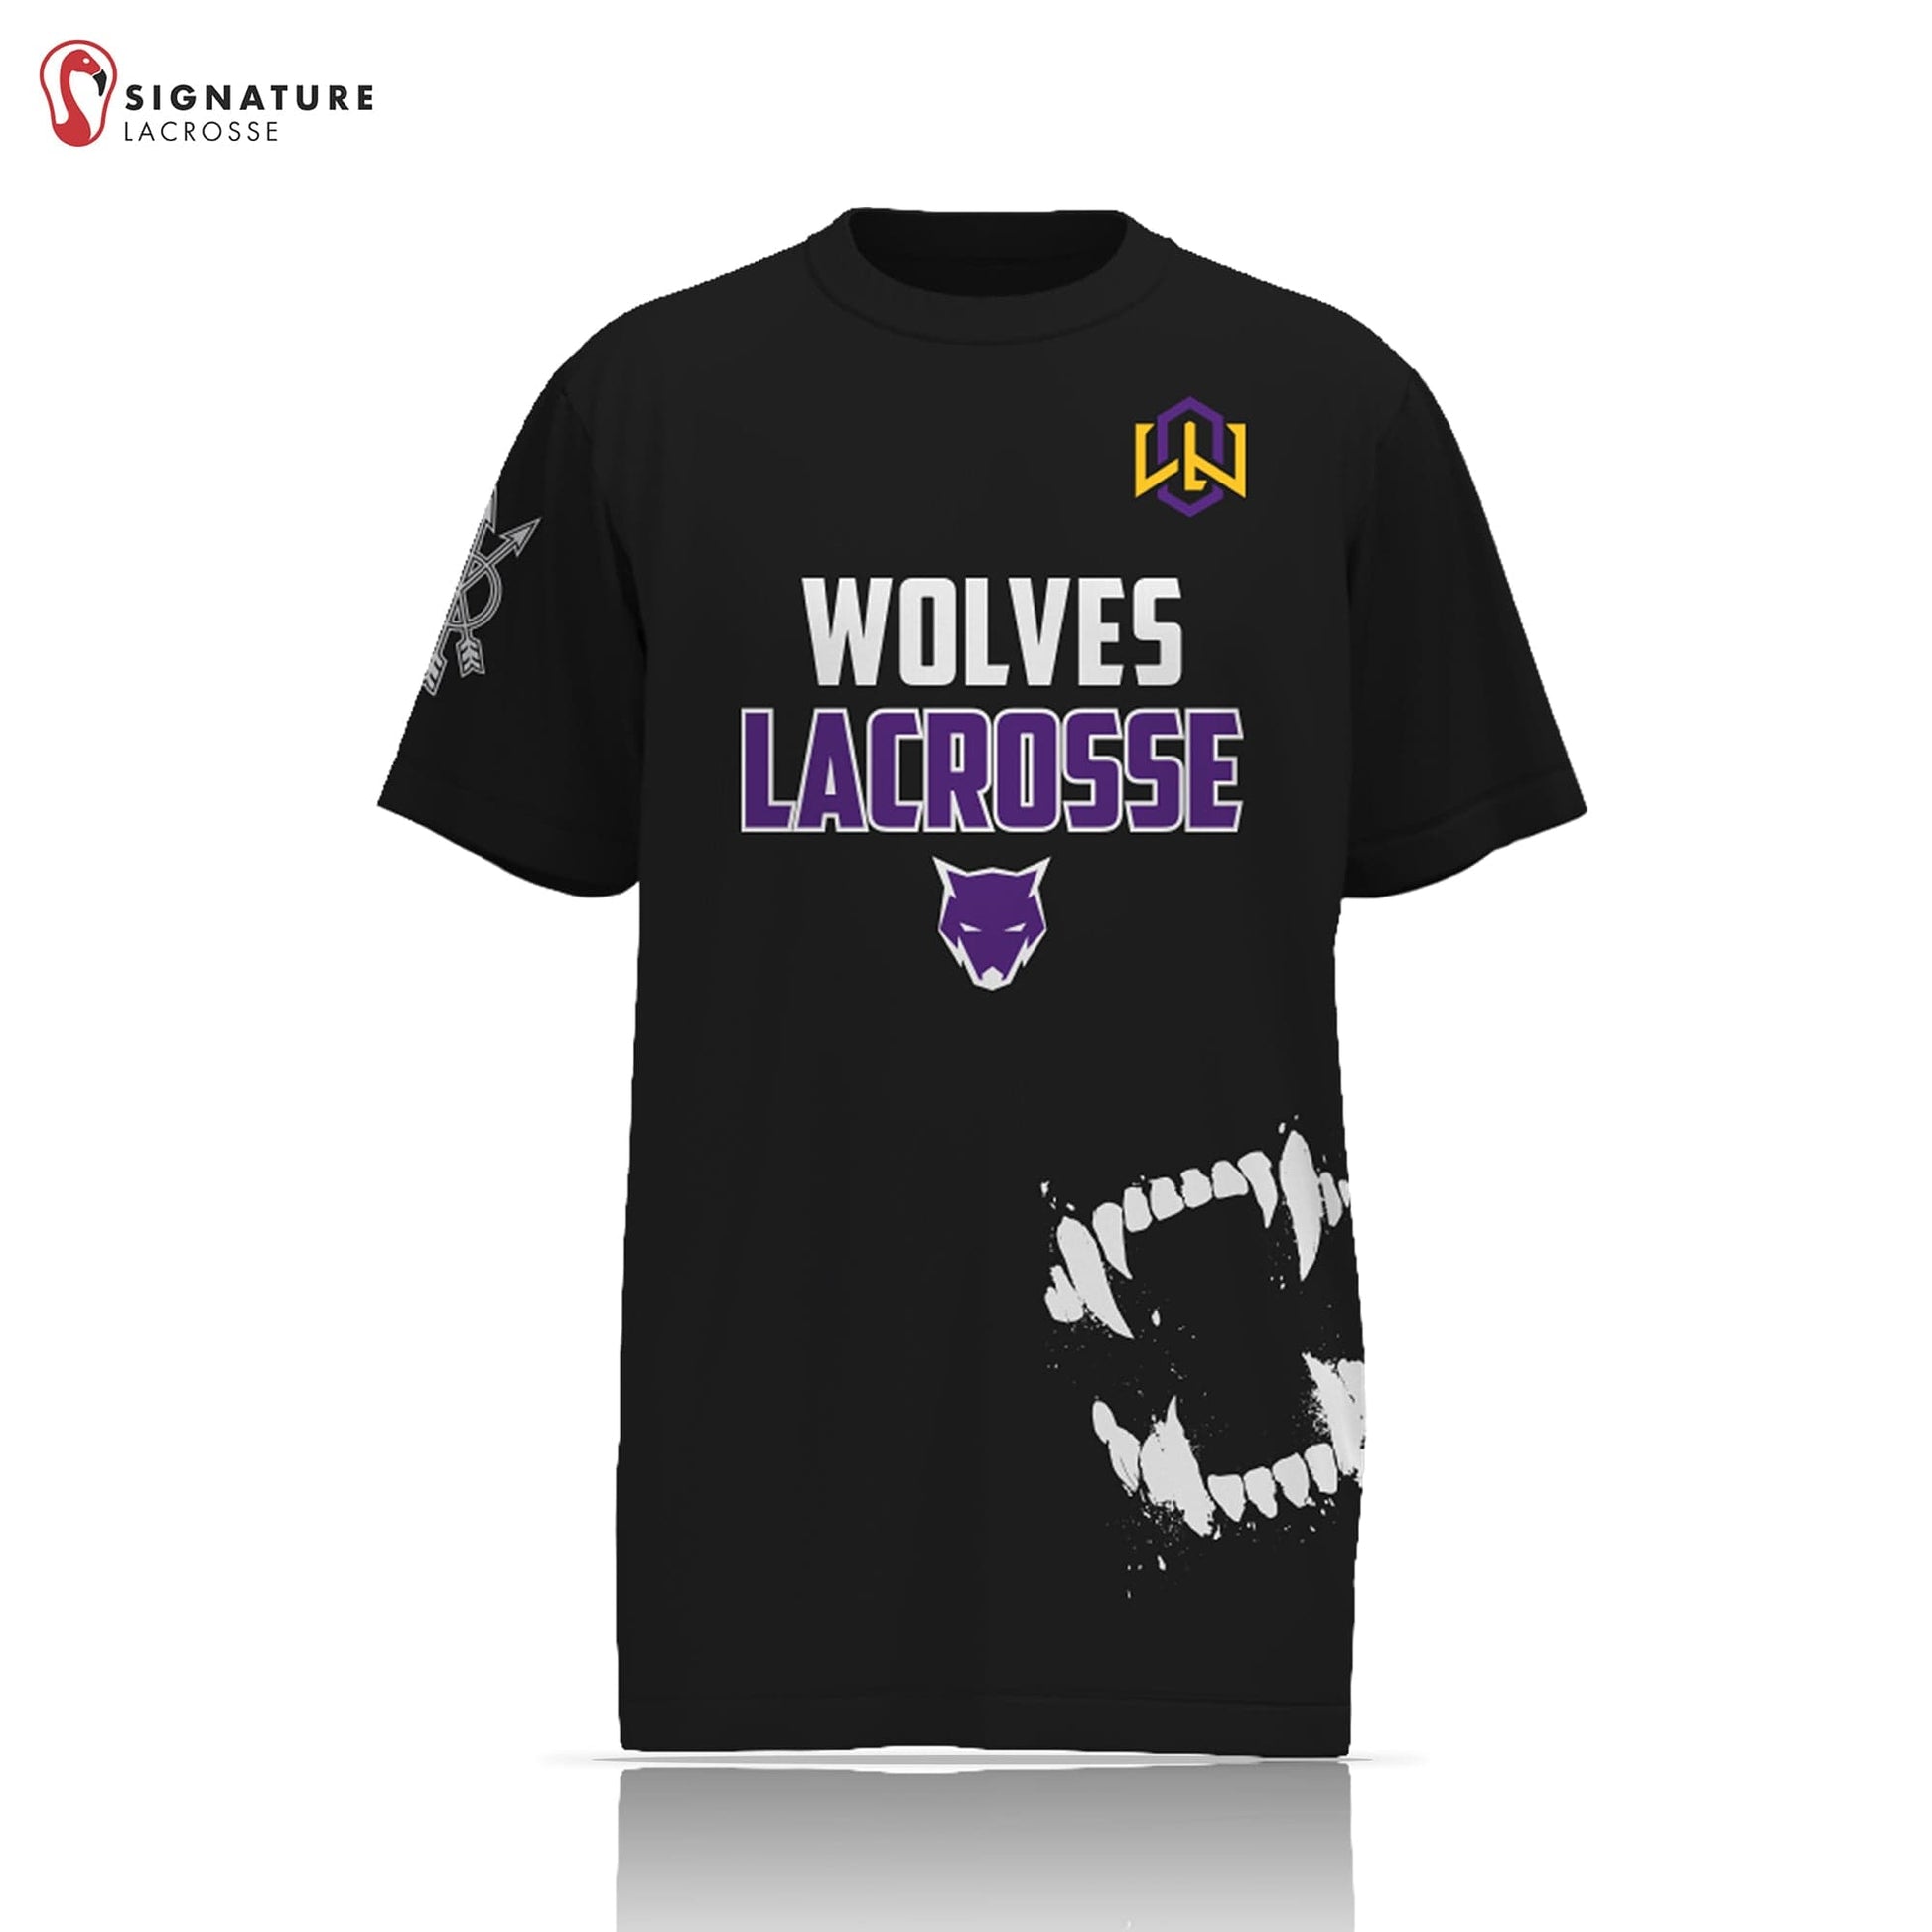 Wolves Lacrosse Club Men's Short Sleeve Shooter Shirt Signature Lacrosse